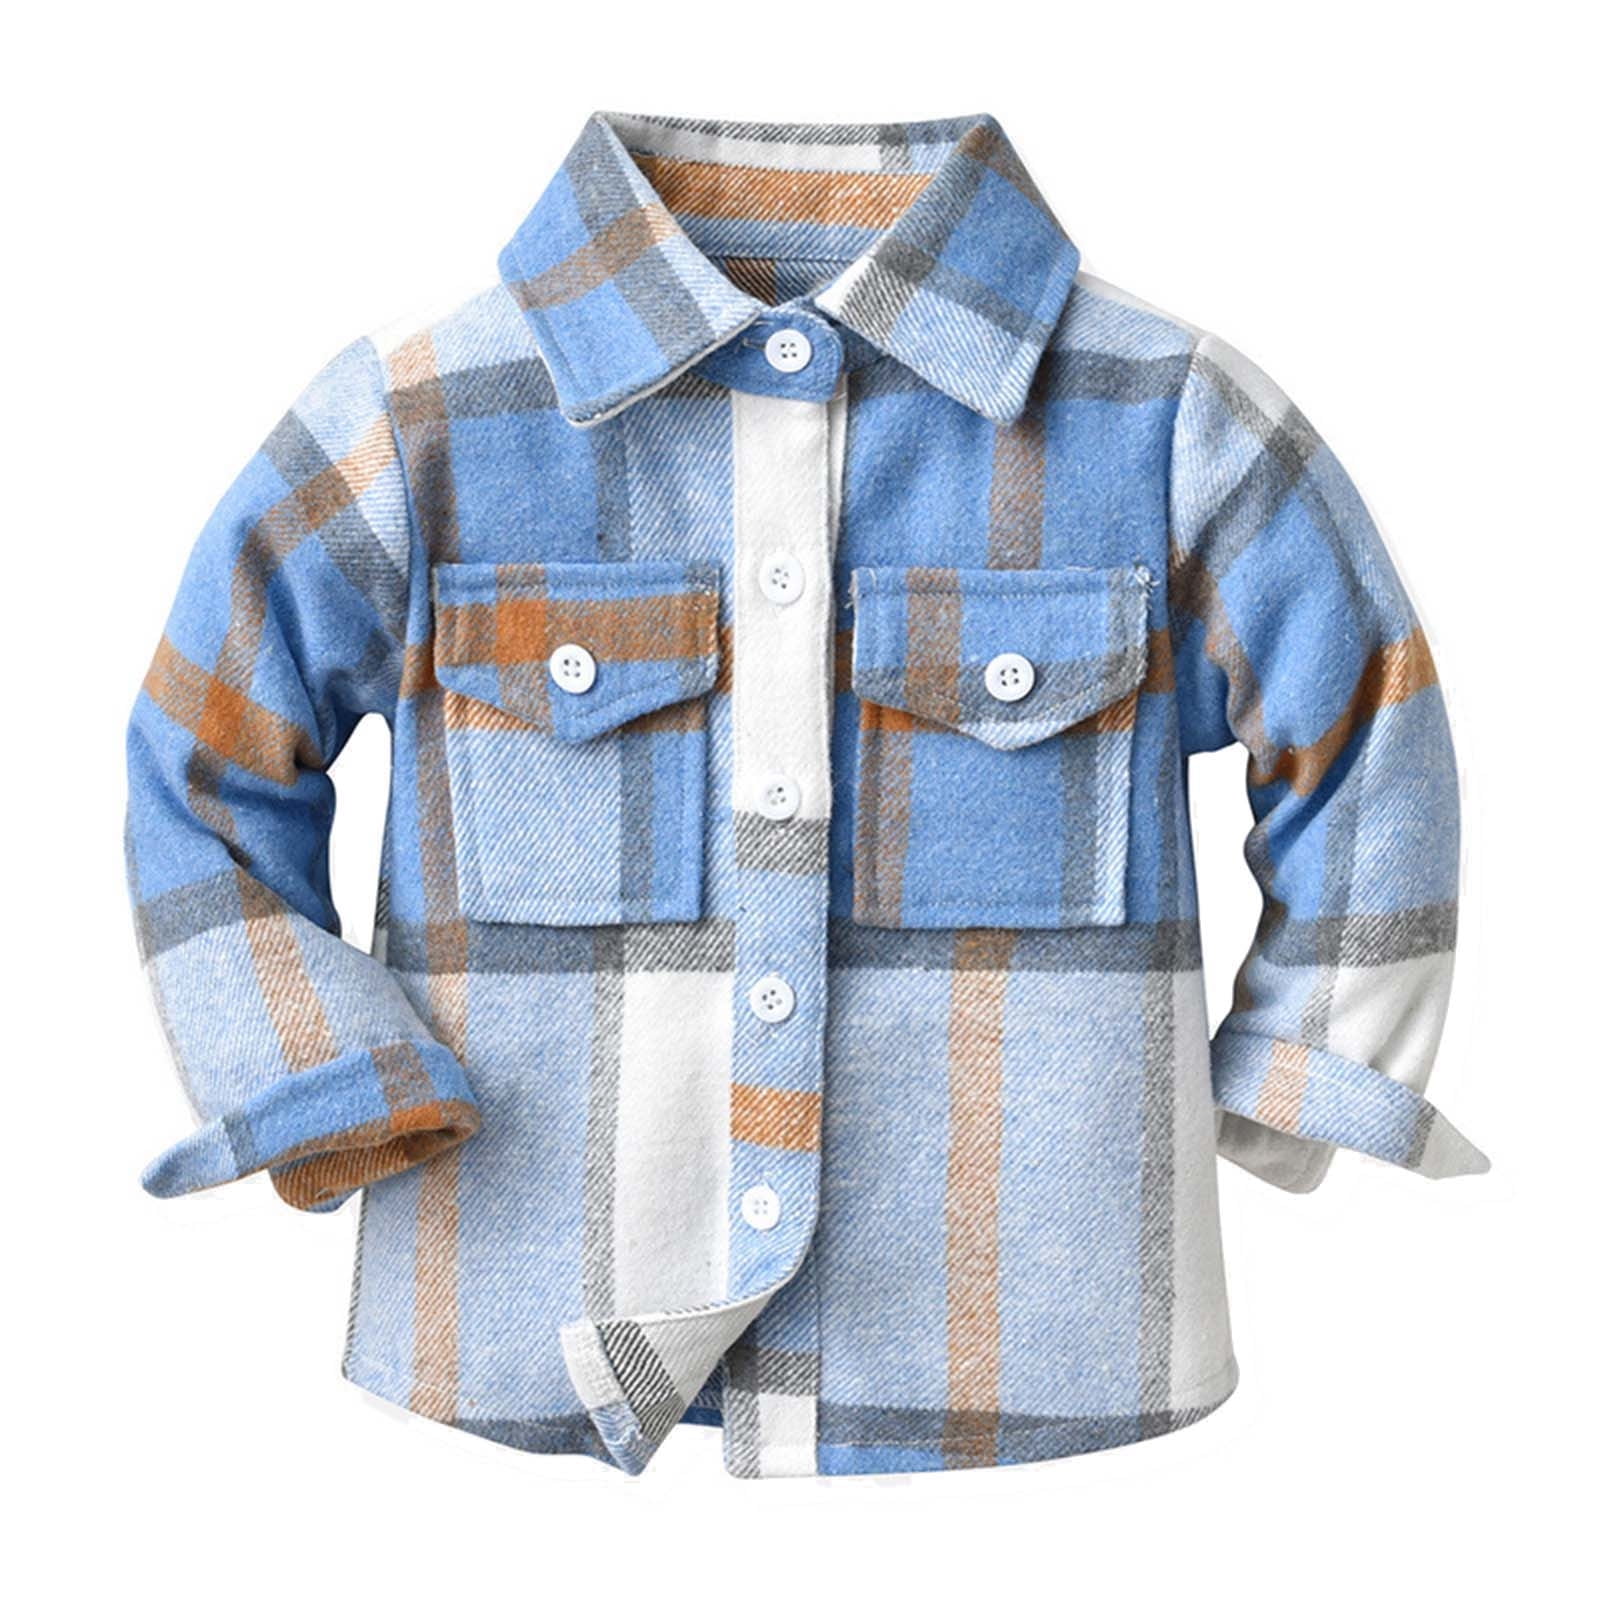 Plaid Shirts for Boys Juebong Toddler Flannel Shirt Jacket Plaid